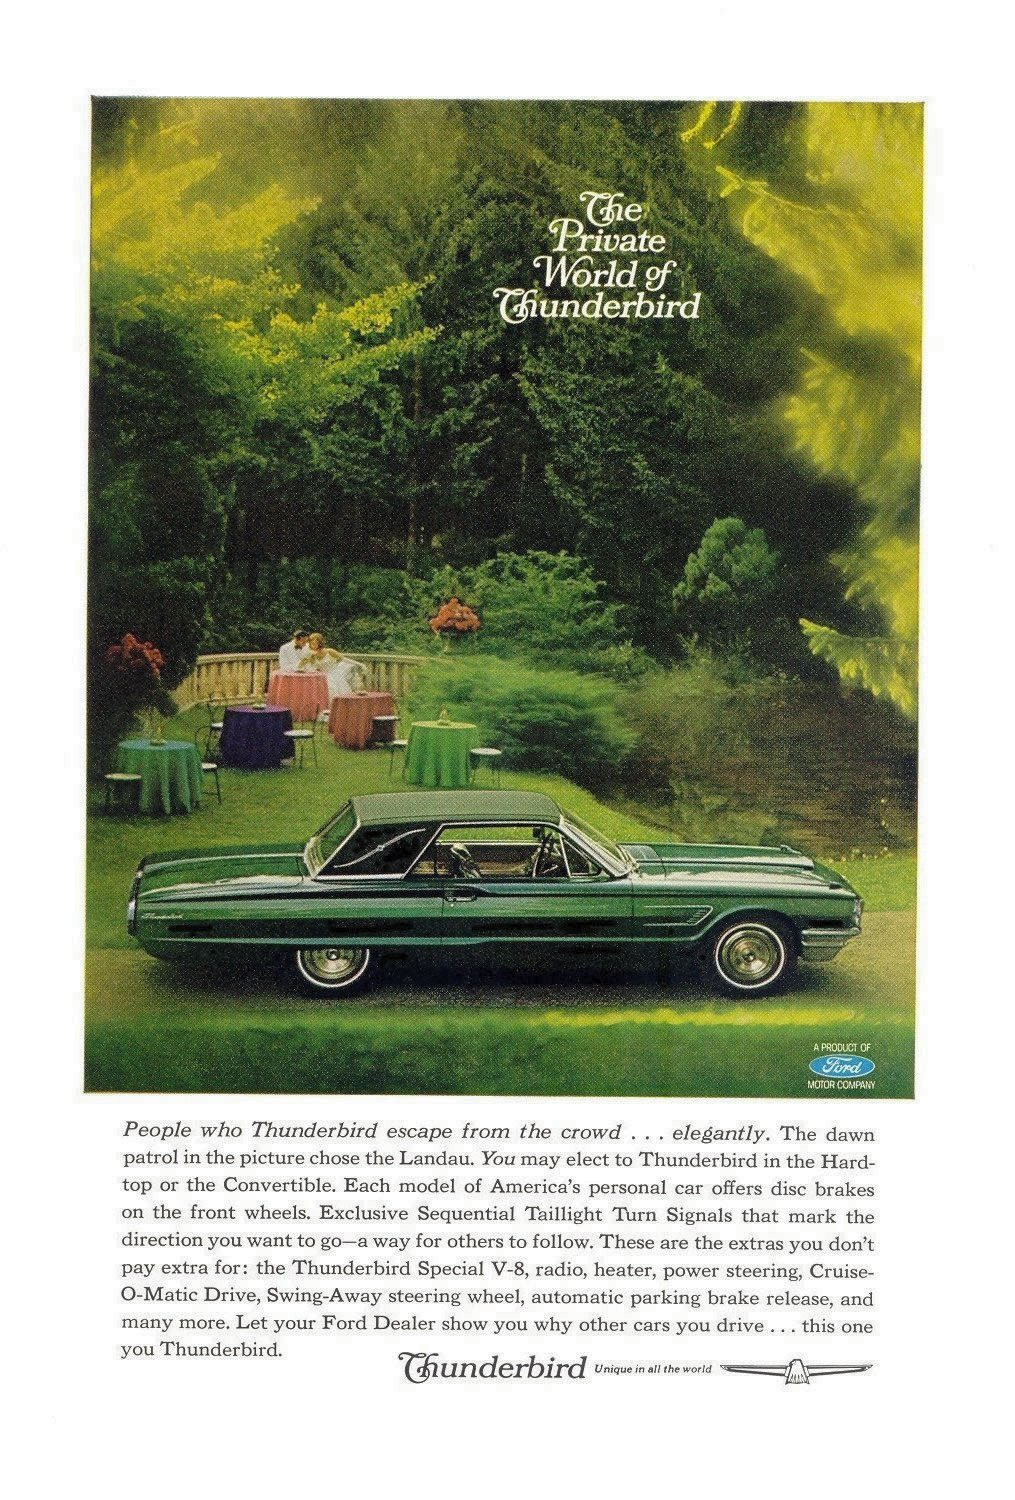 1965 Ford Thunderbird Advertising